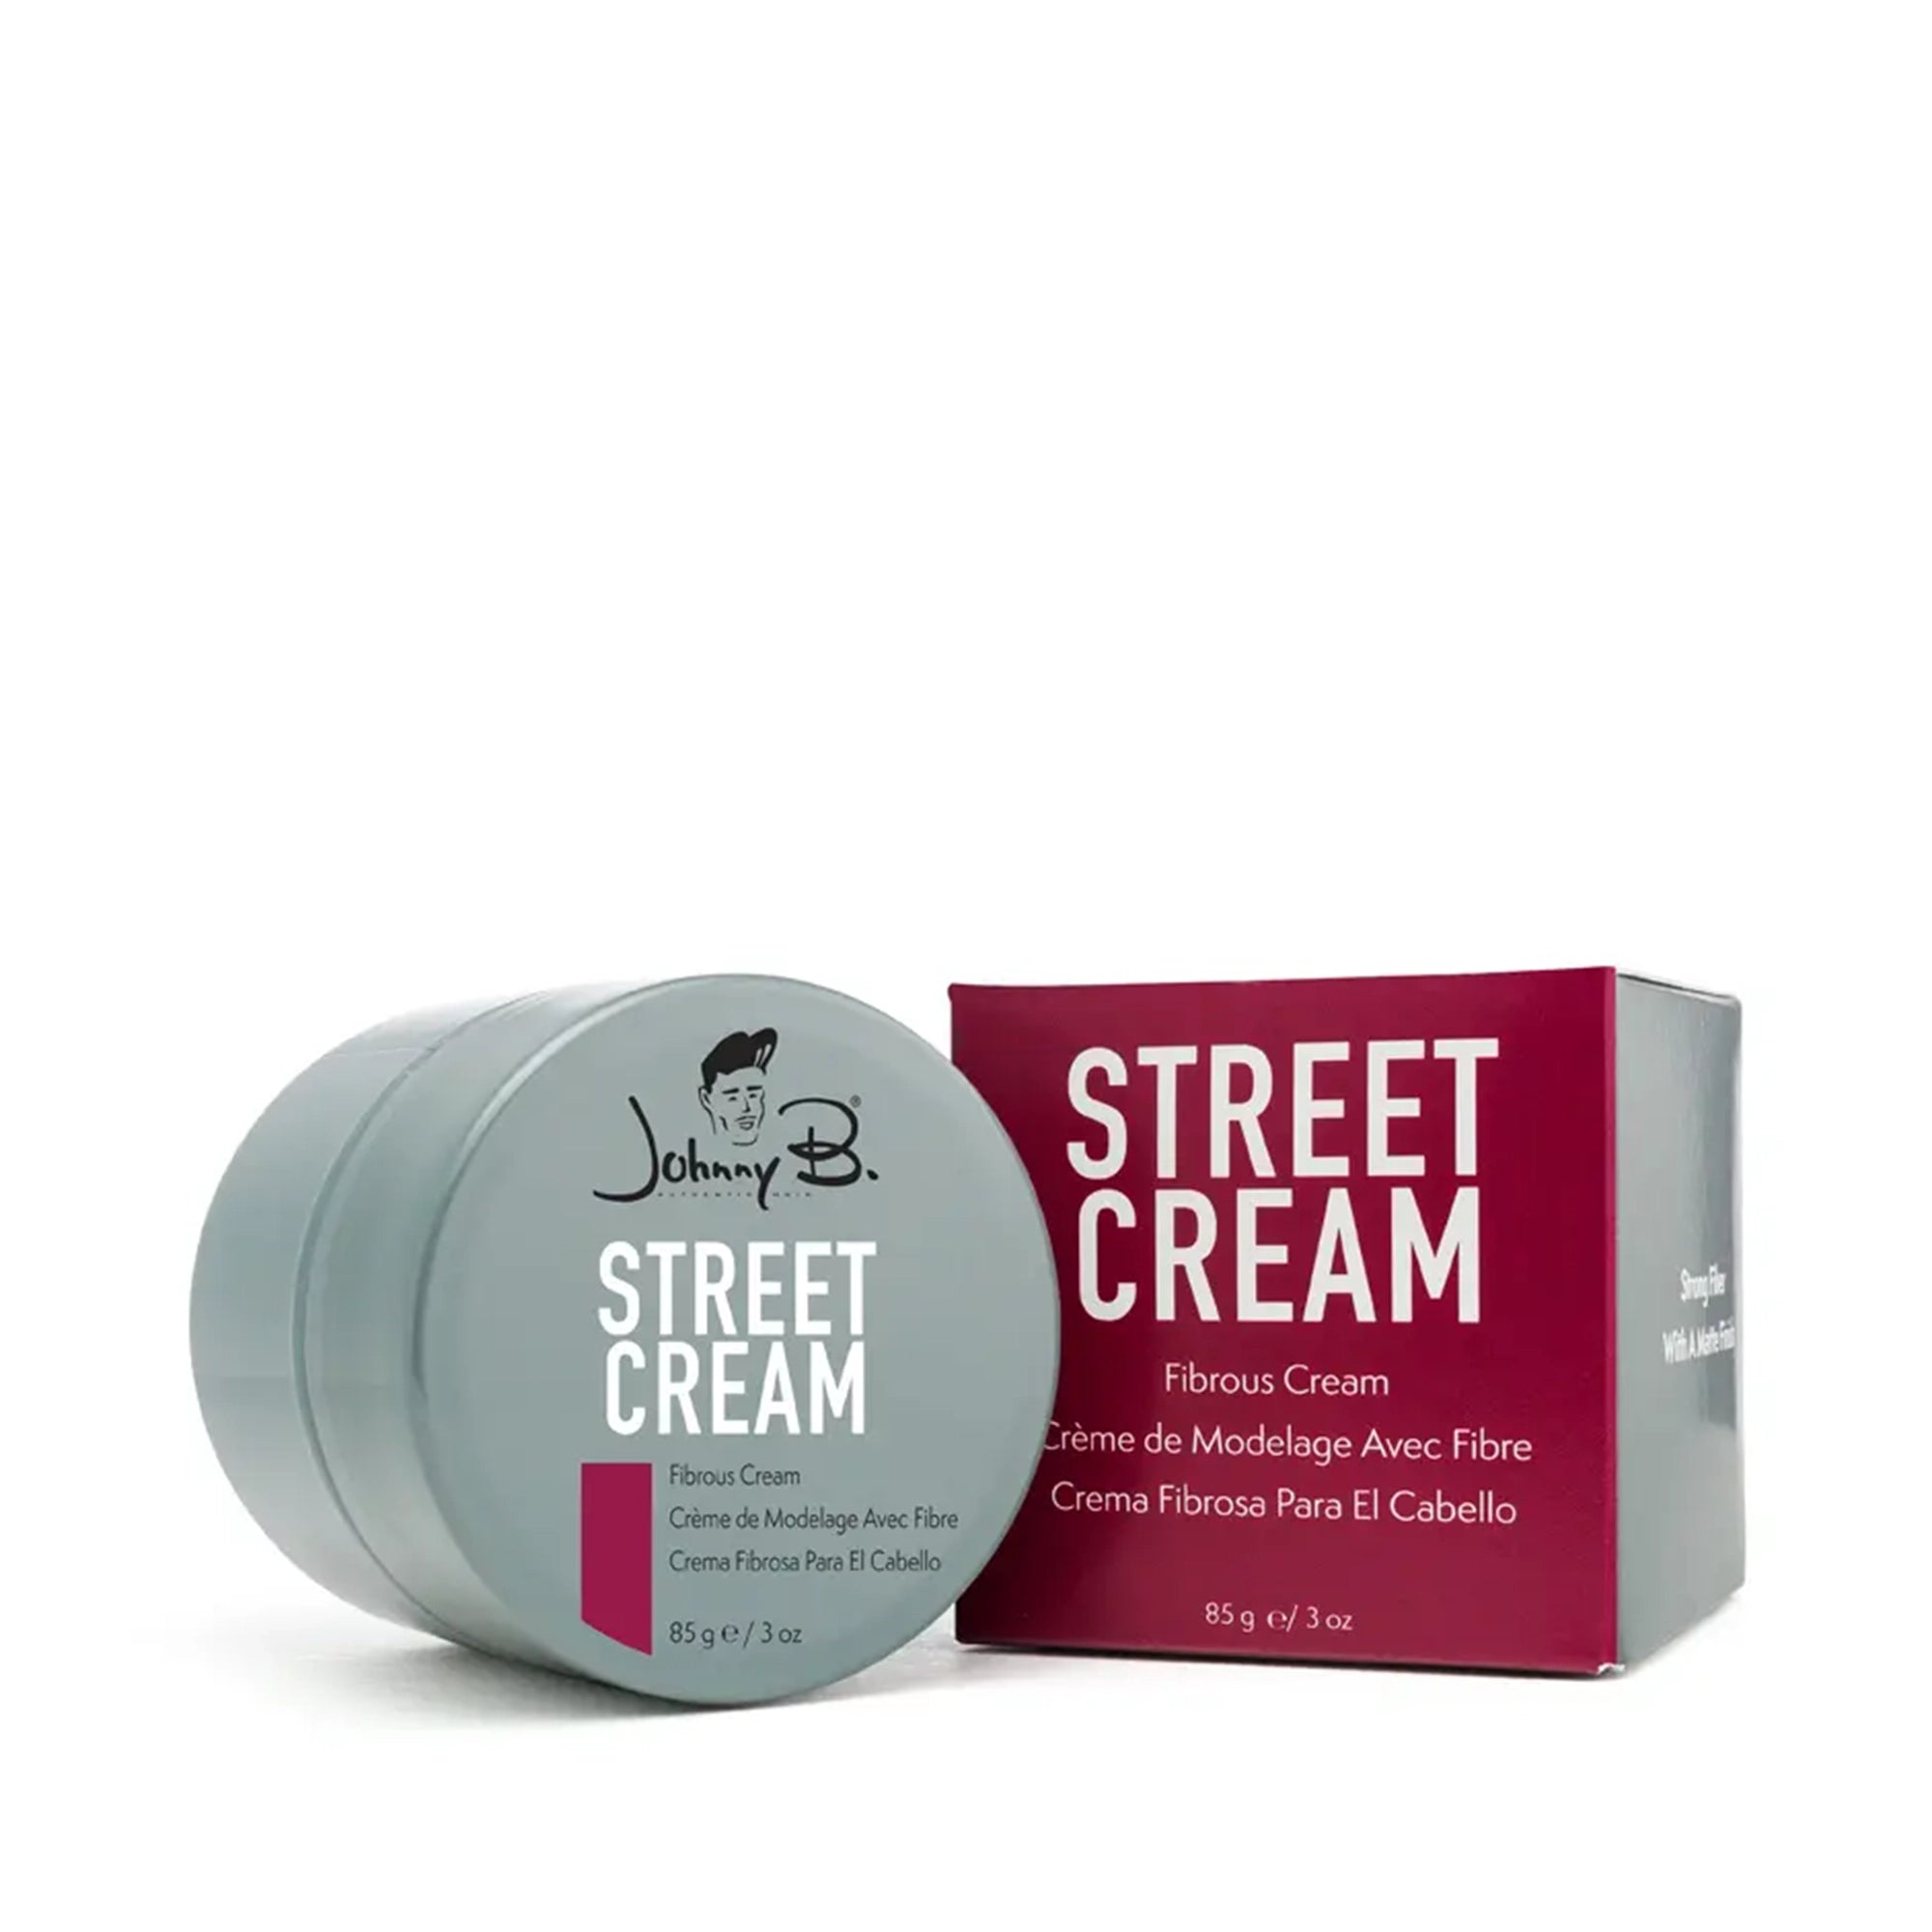 Johnny B Street Cream - 3oz / 3 oz